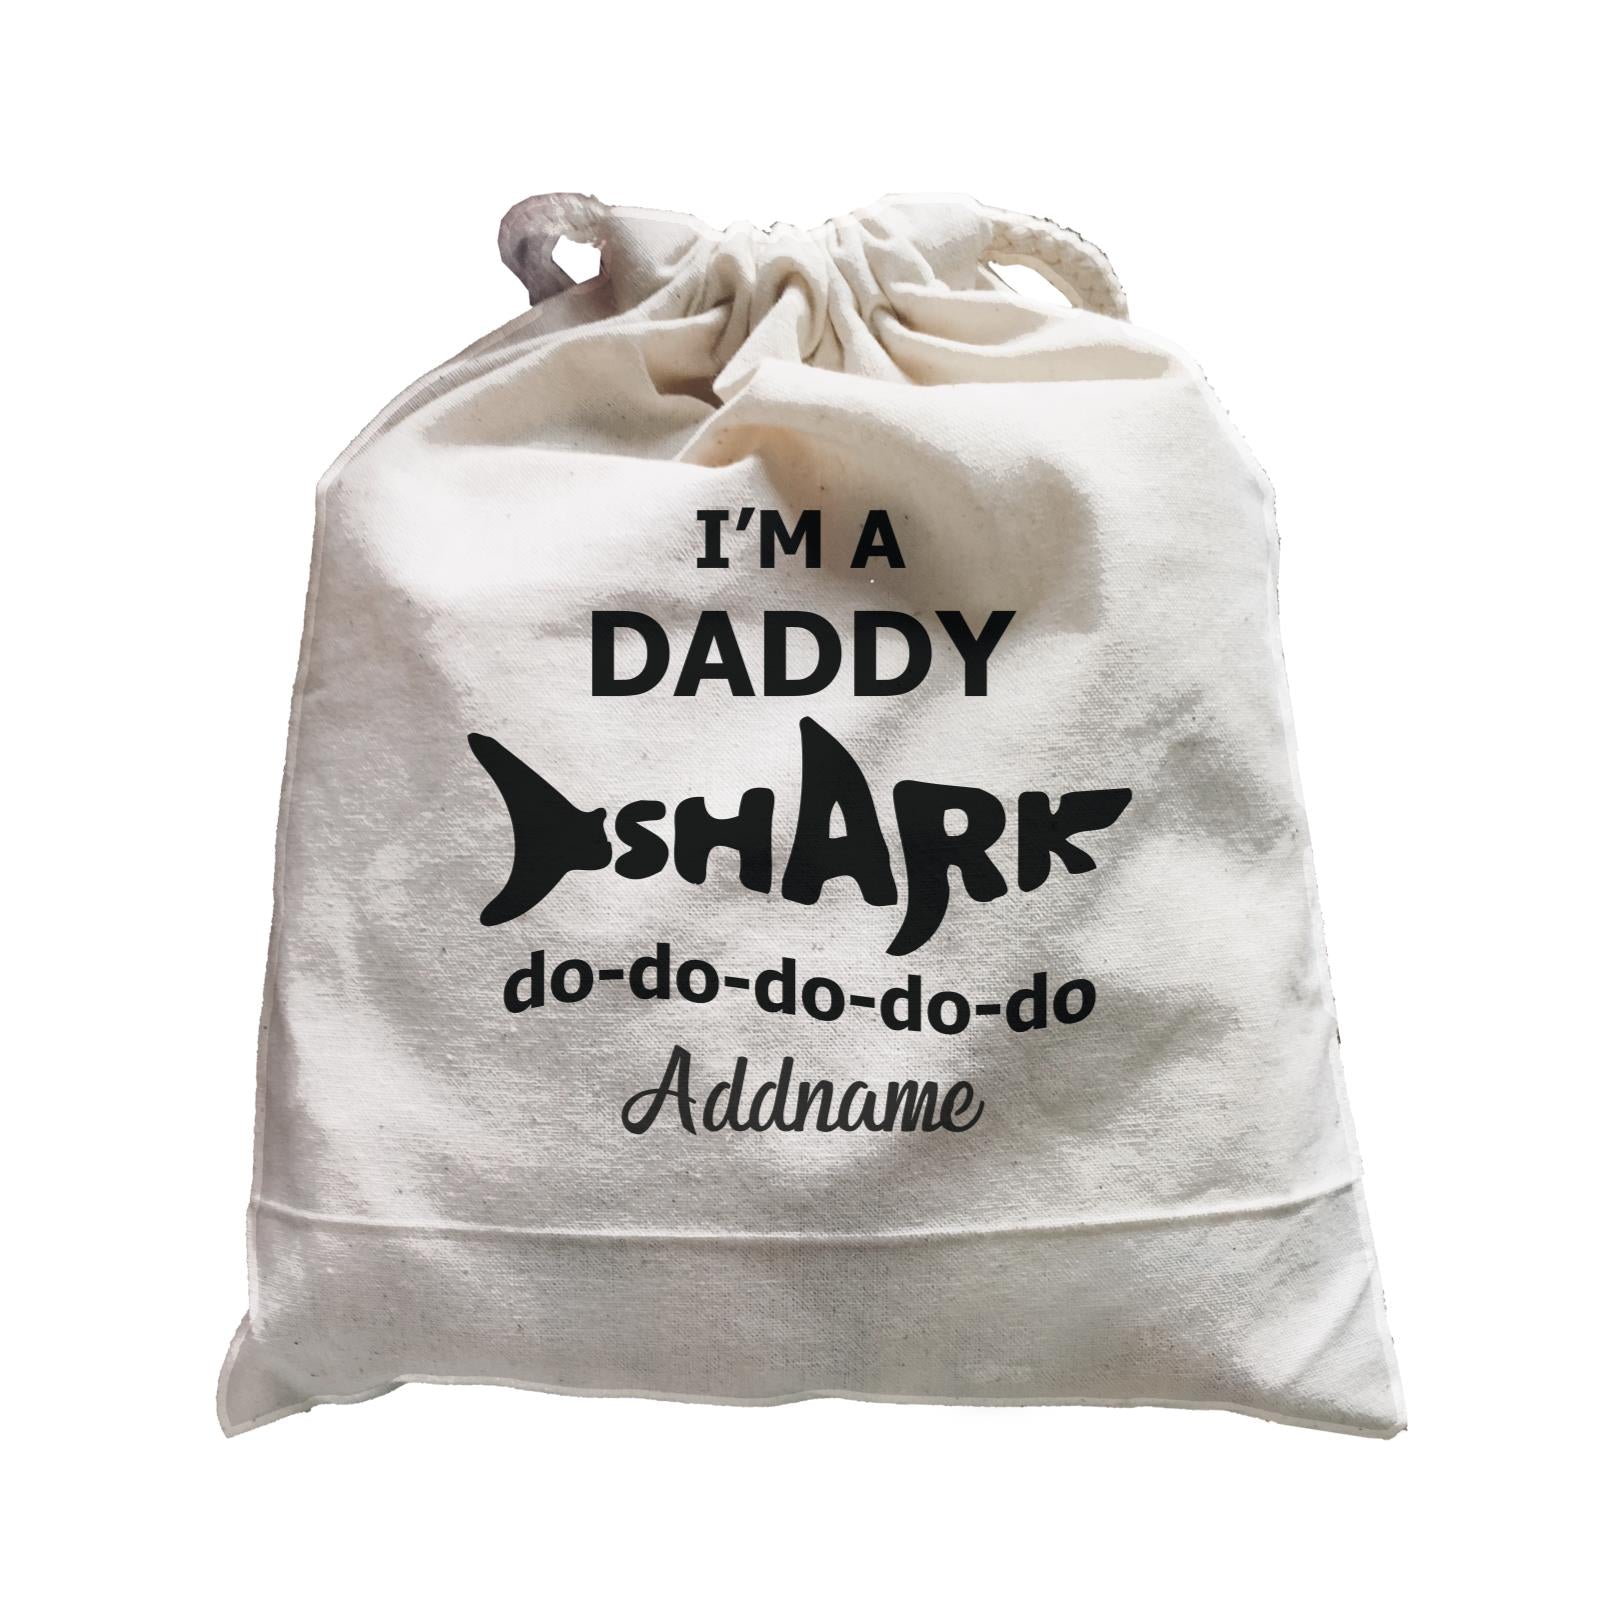 Shark Shape Family Im A Daddy Shark Doo Doo Addname Satchel